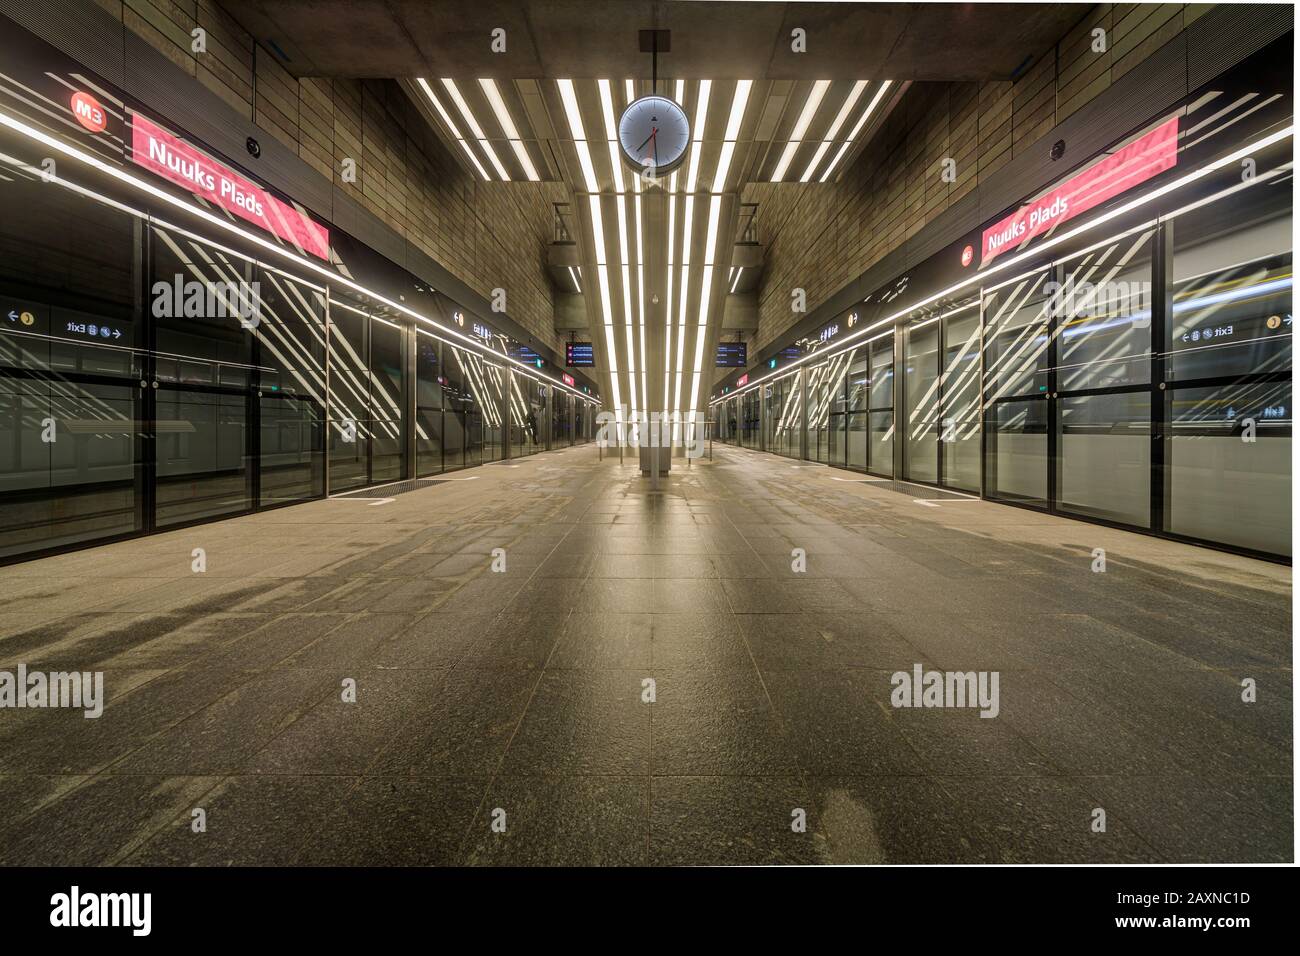 The platform at Nuuk Square Metro Station on the newly opened Cityringen metro in Copenhagen Stock Photo